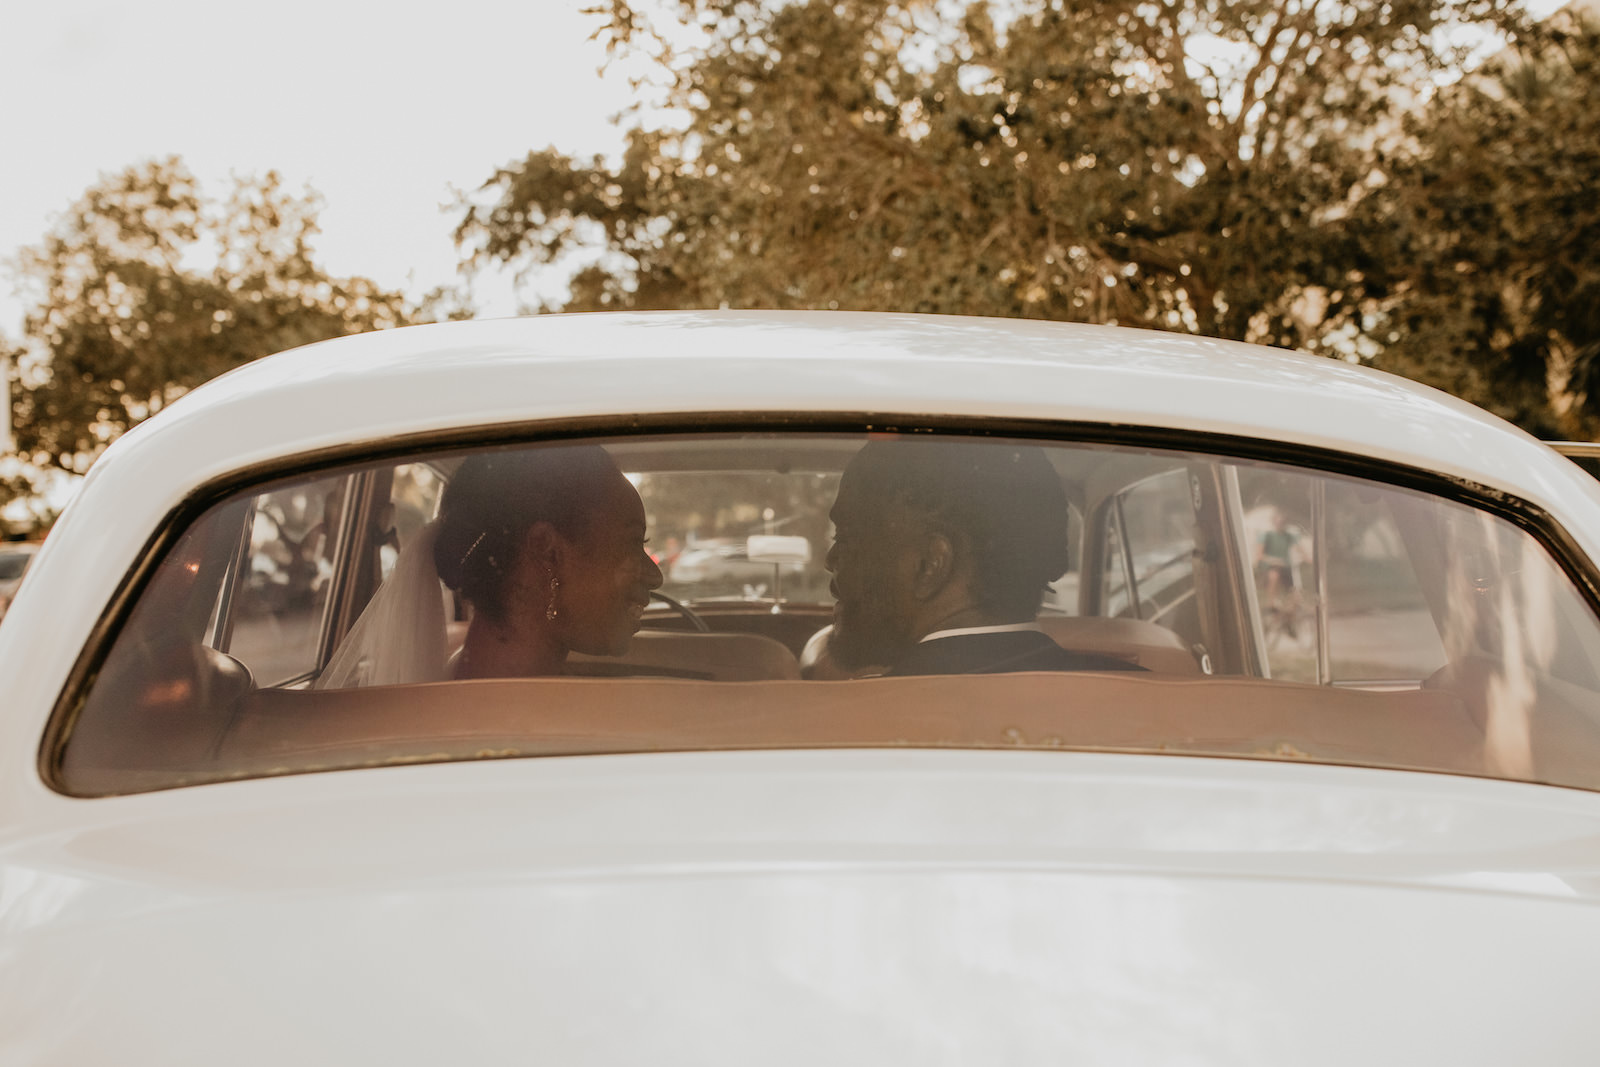 Intimate Elopement Wedding, Bride and Groom in Vintage Getaway Car | Tampa Bay Wedding Planner Elope Tampa Bay